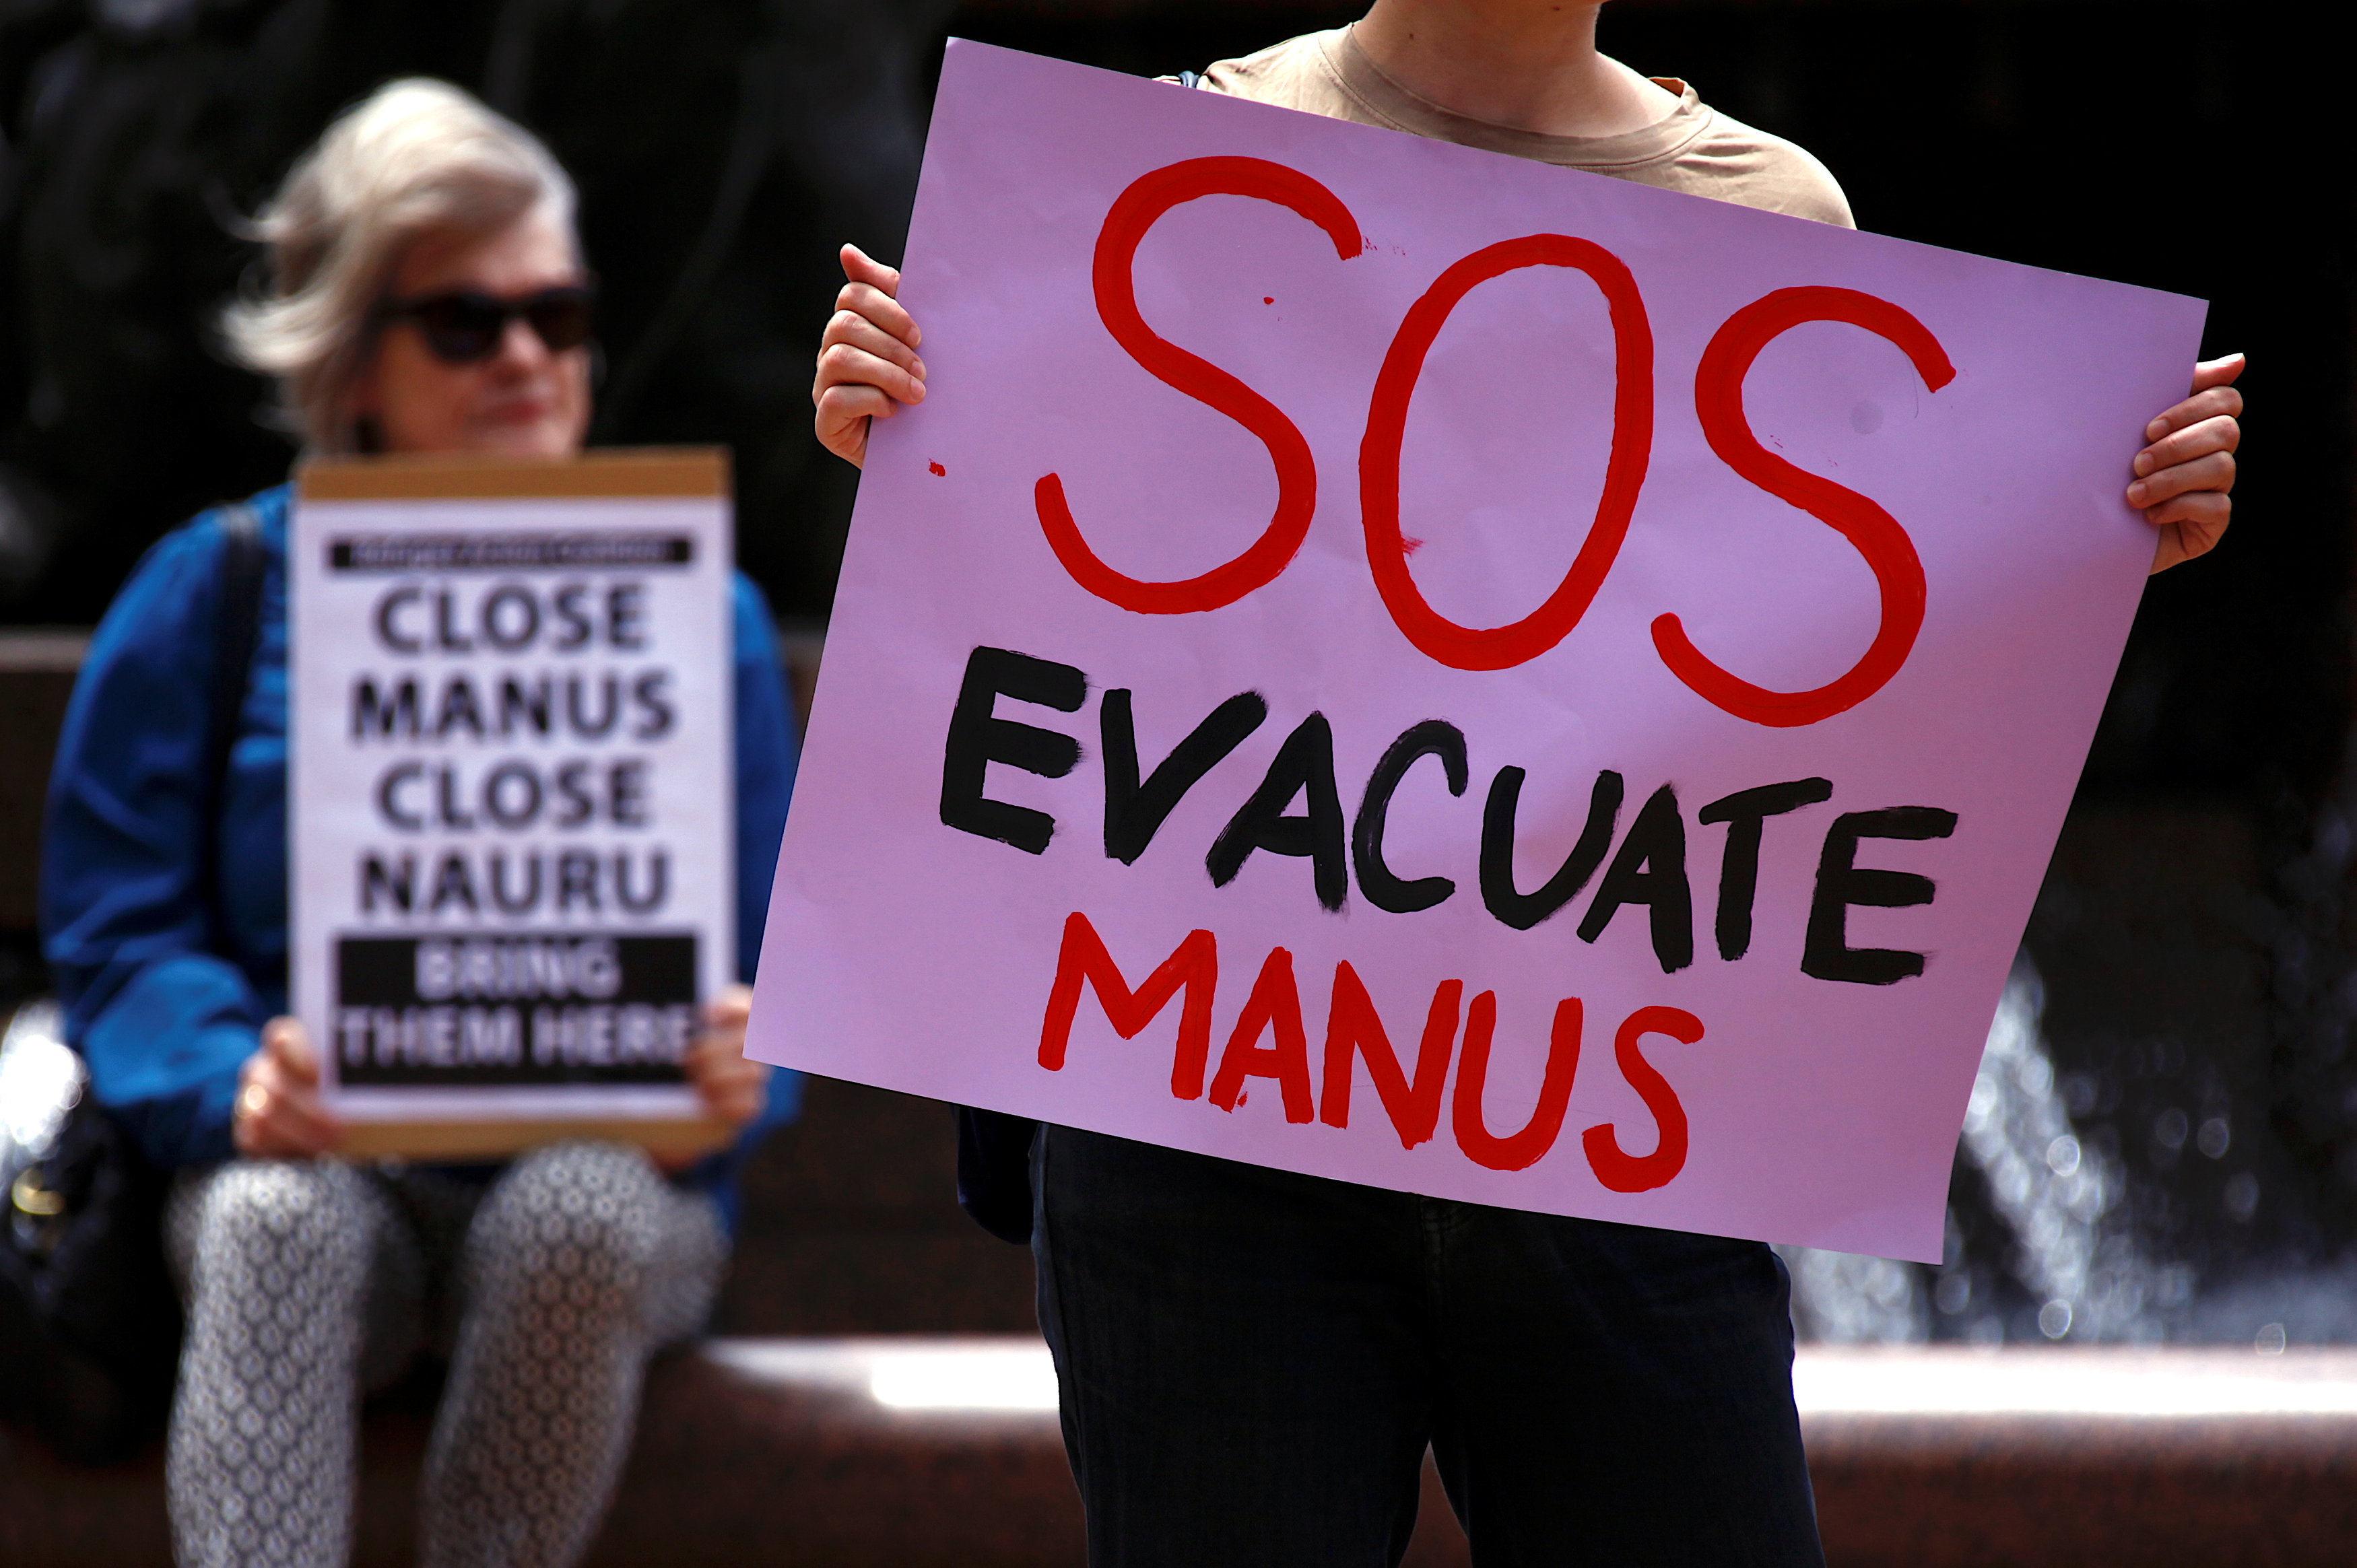 Australian medical group wants access to Manus Island asylum seekers